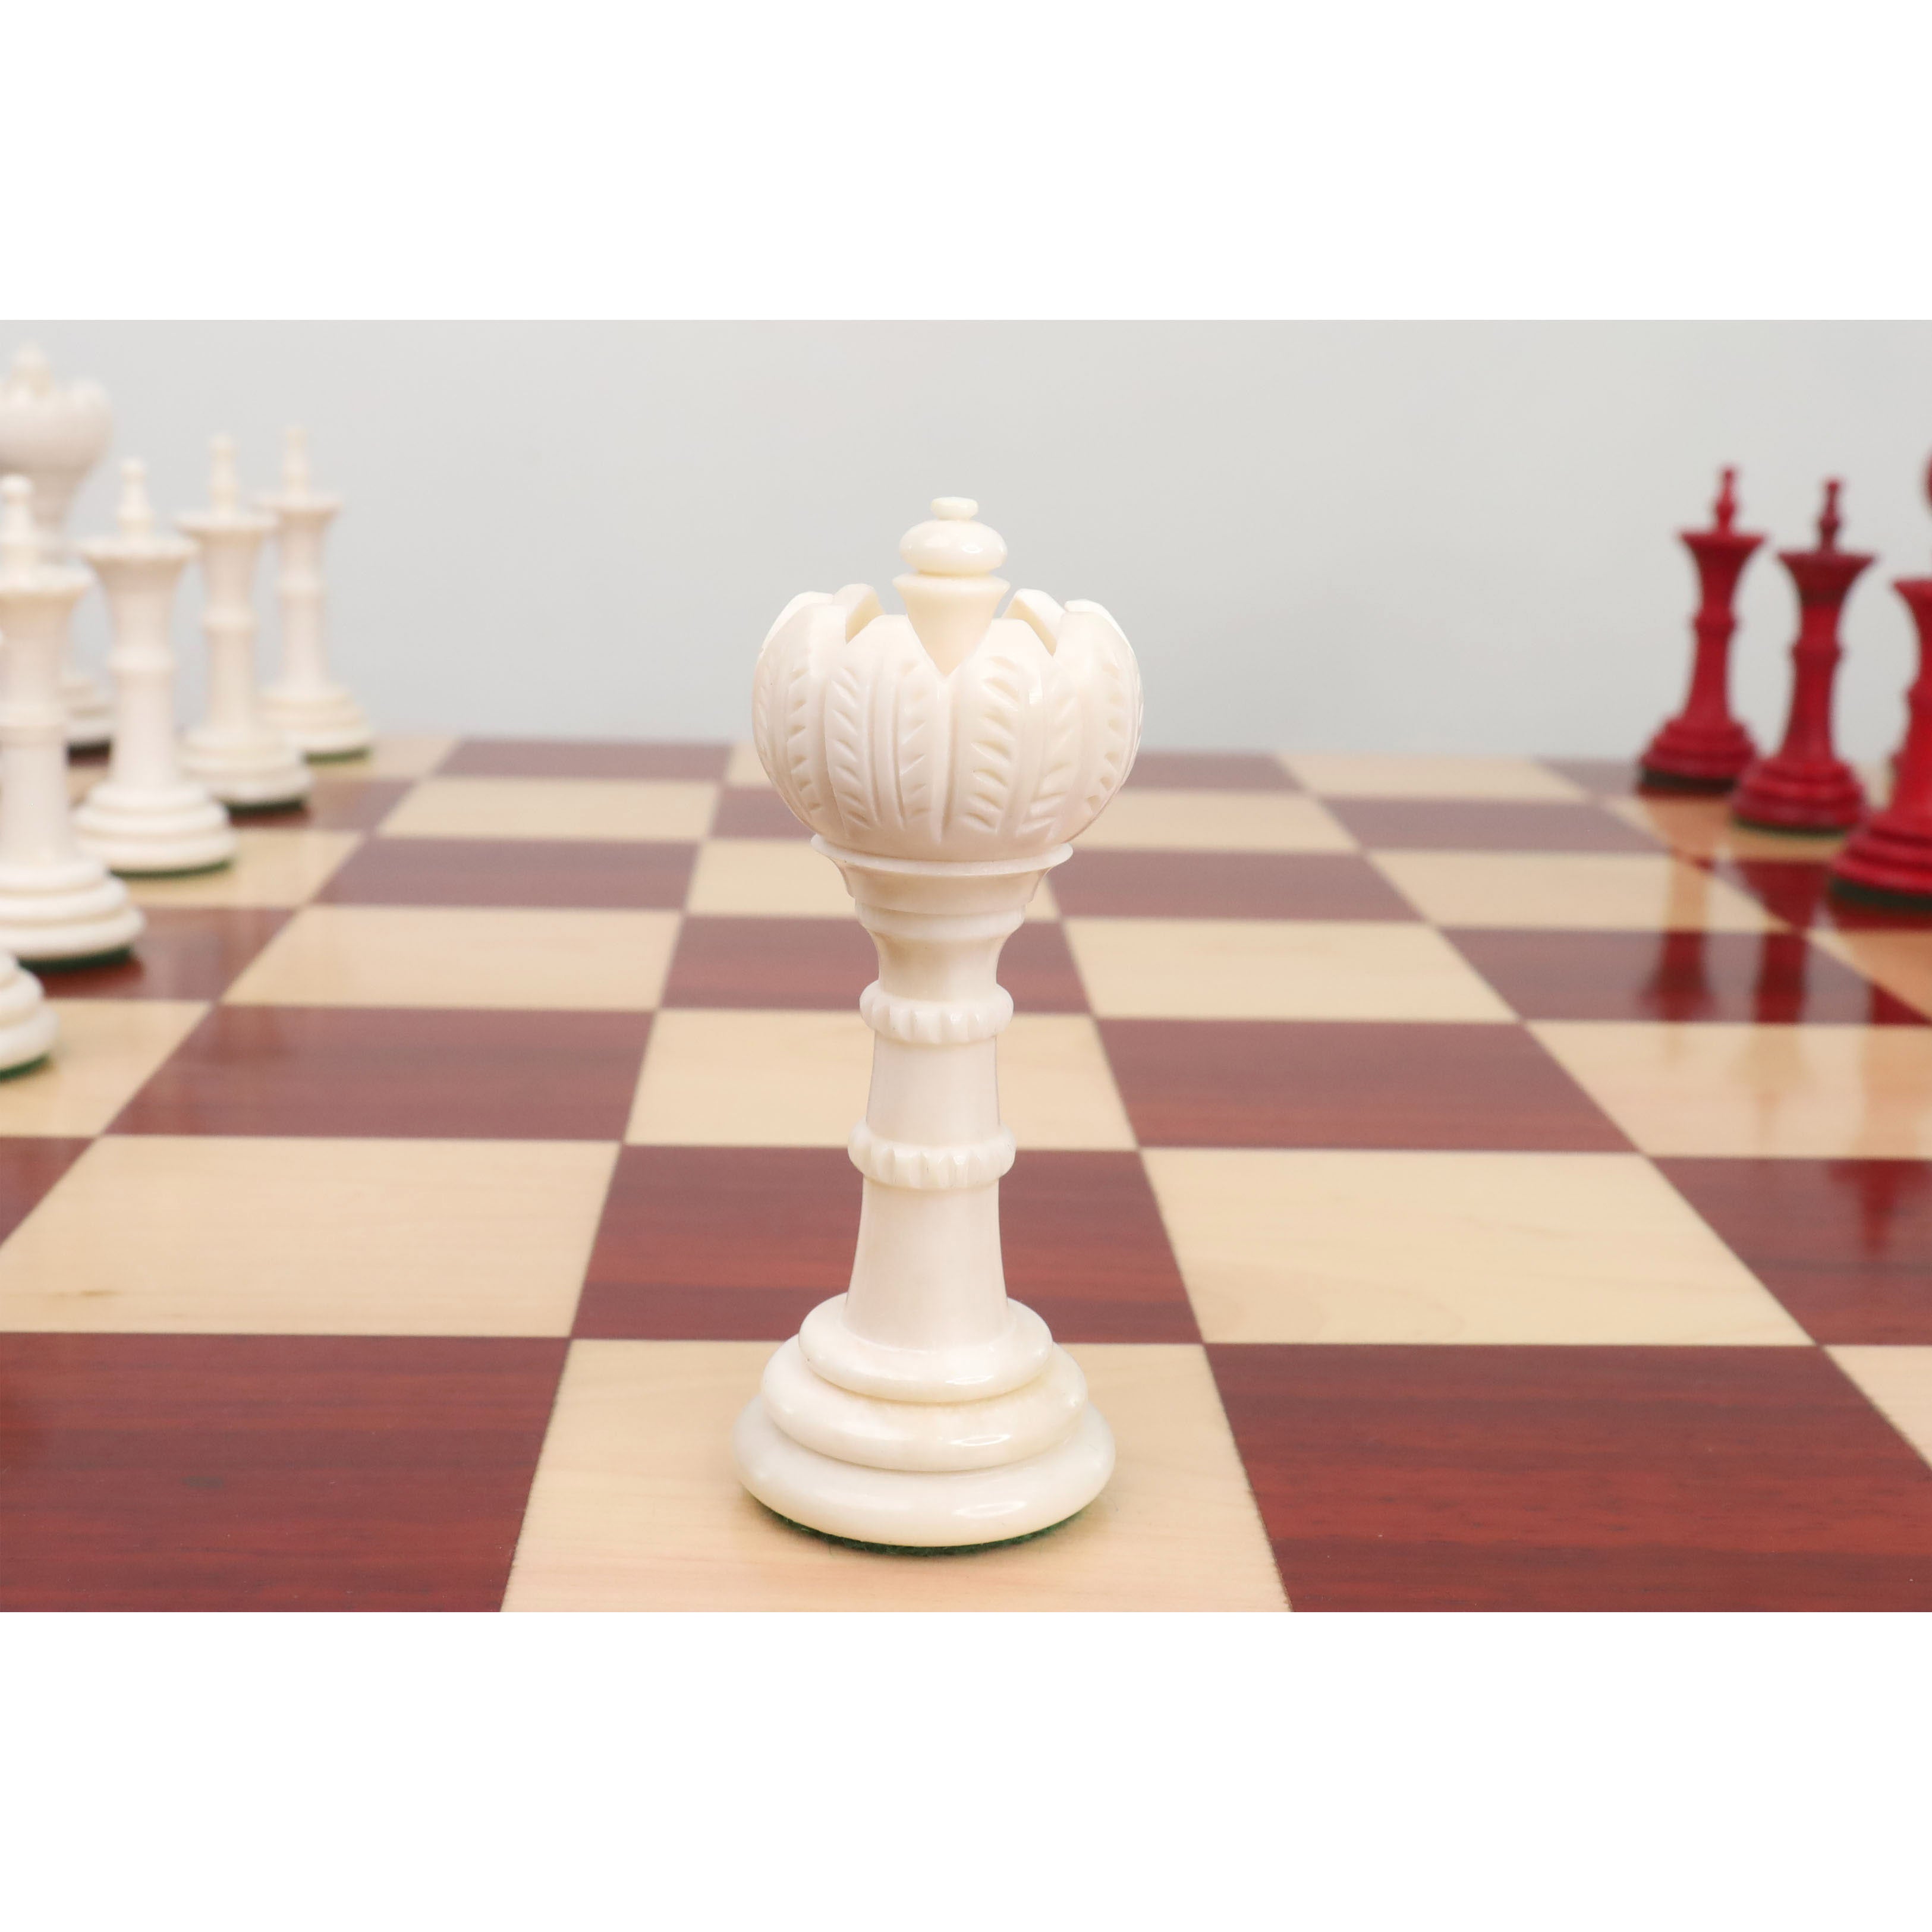 4.6″ Turkish Tower Pre-Staunton Chess Pieces Only set-Crimson & White Camel Bone